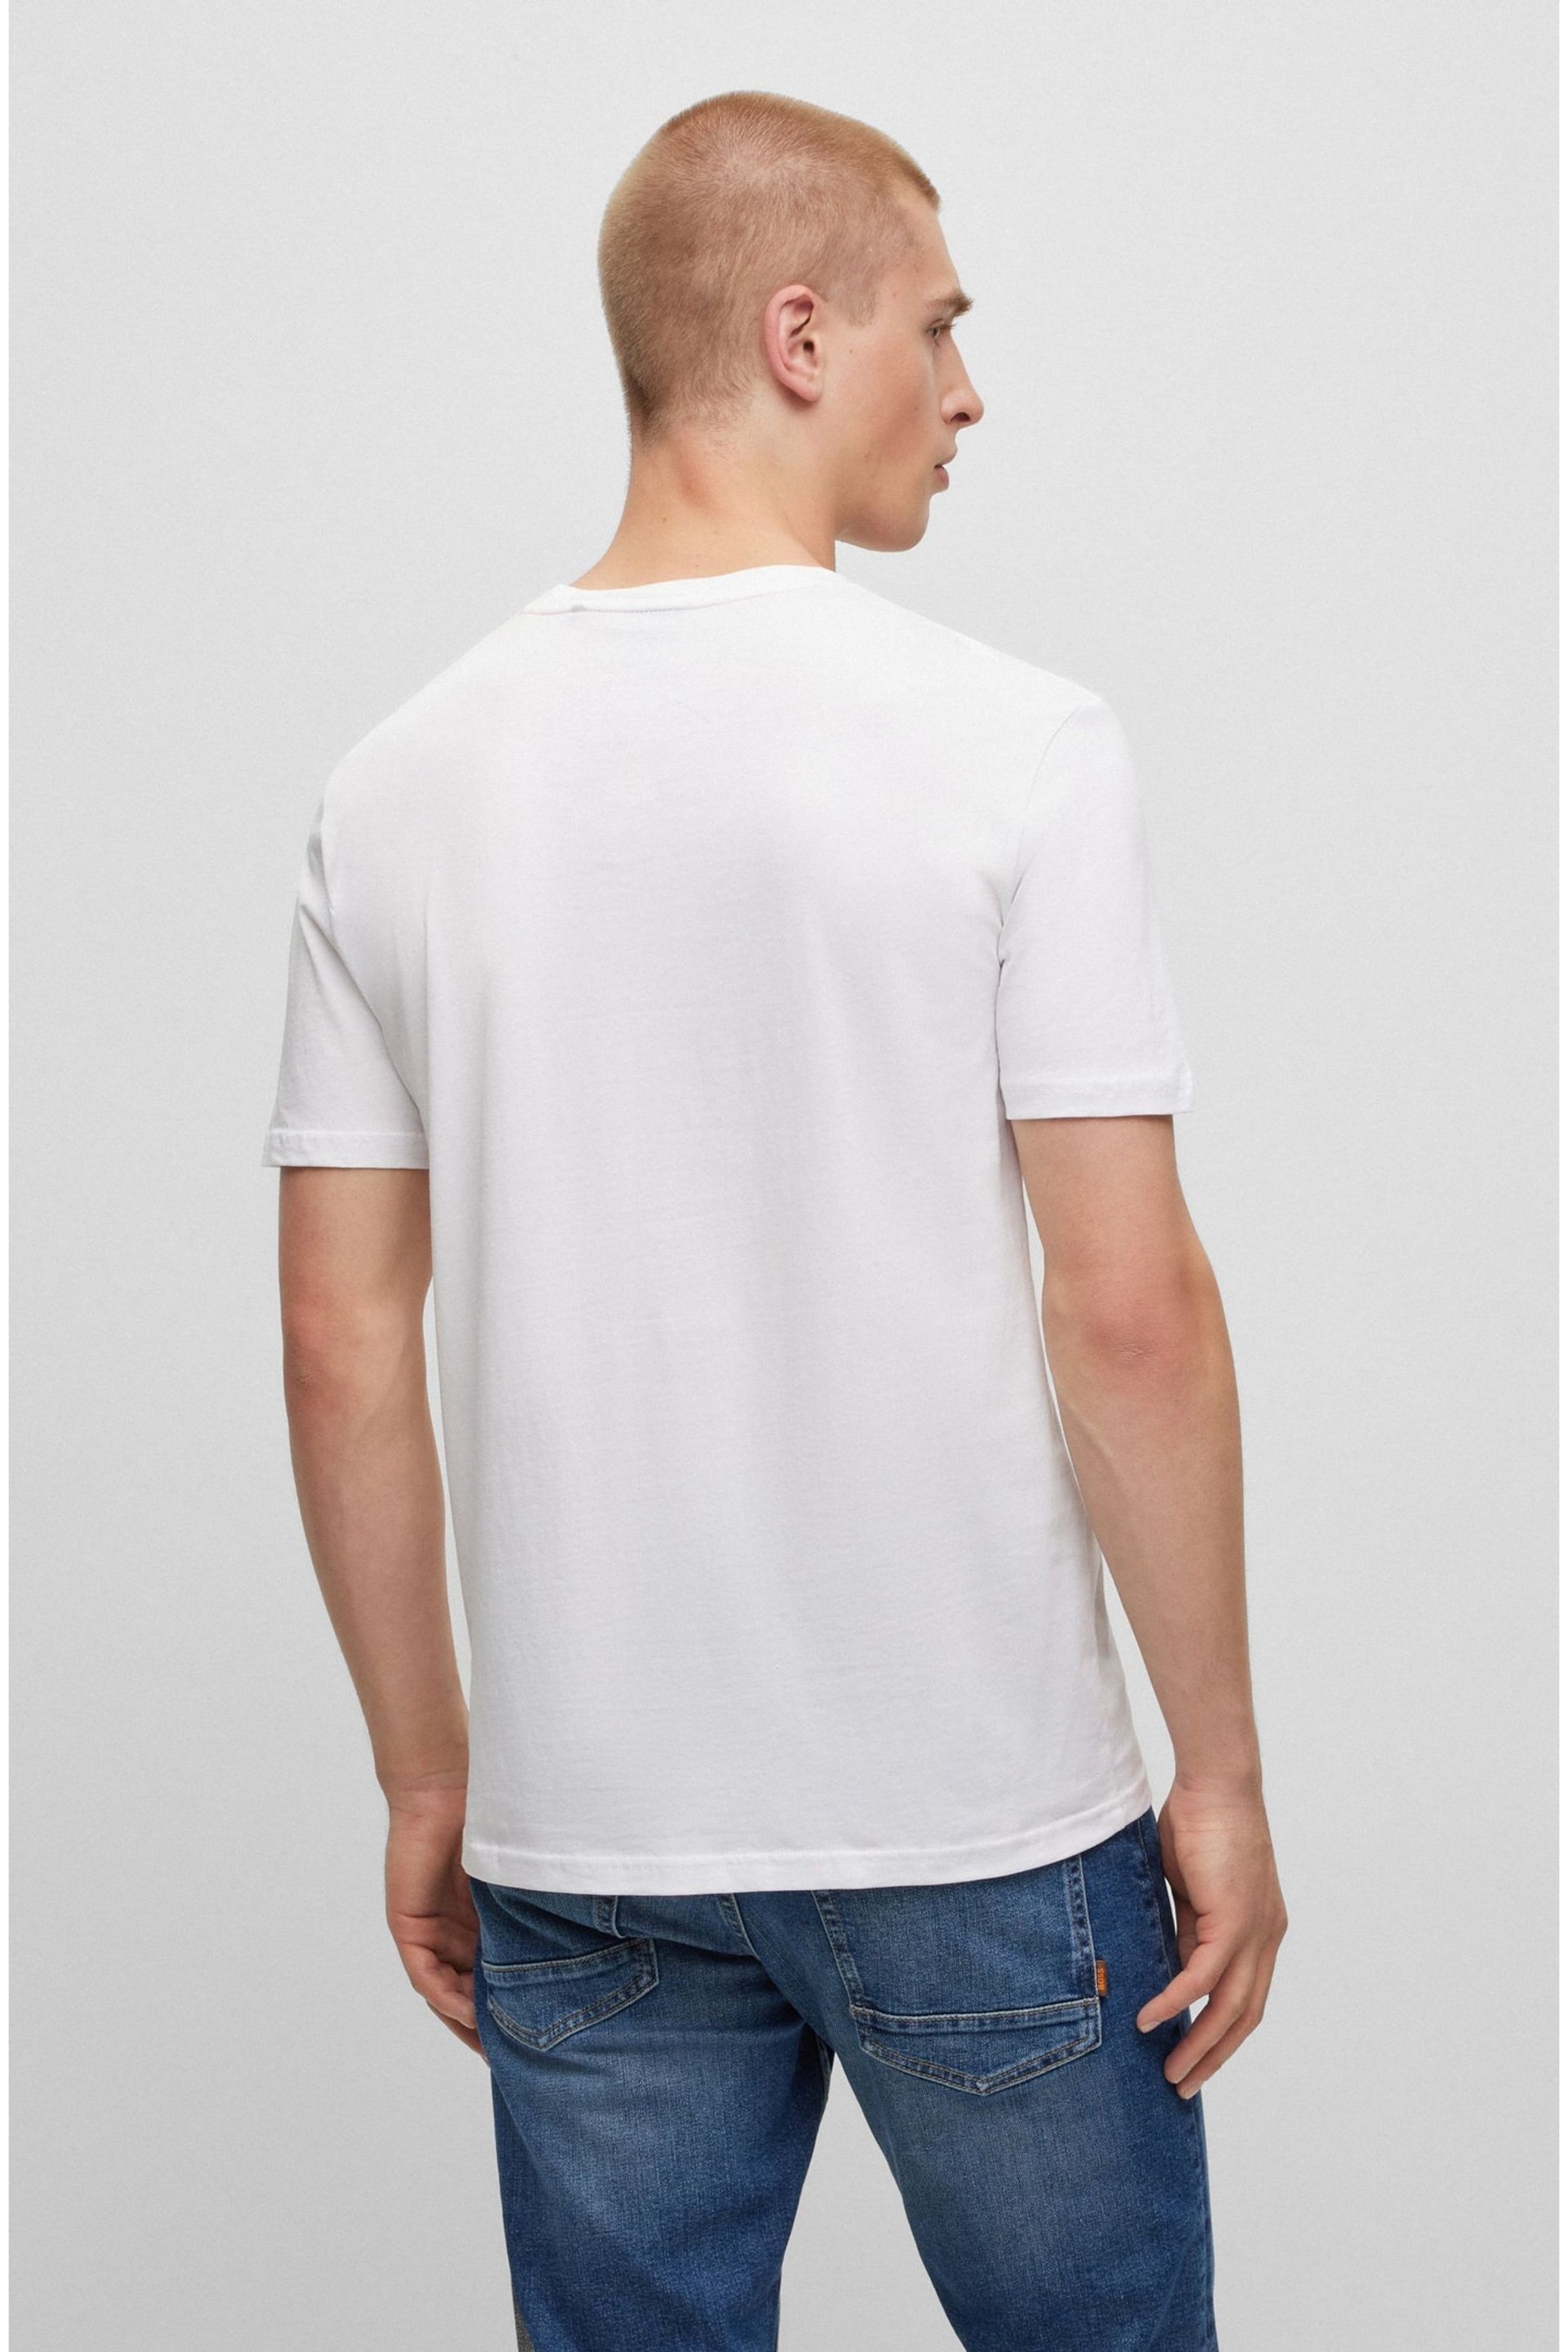 BOSS White/Black Logo Large Chest Logo T-Shirt - Image 2 of 5